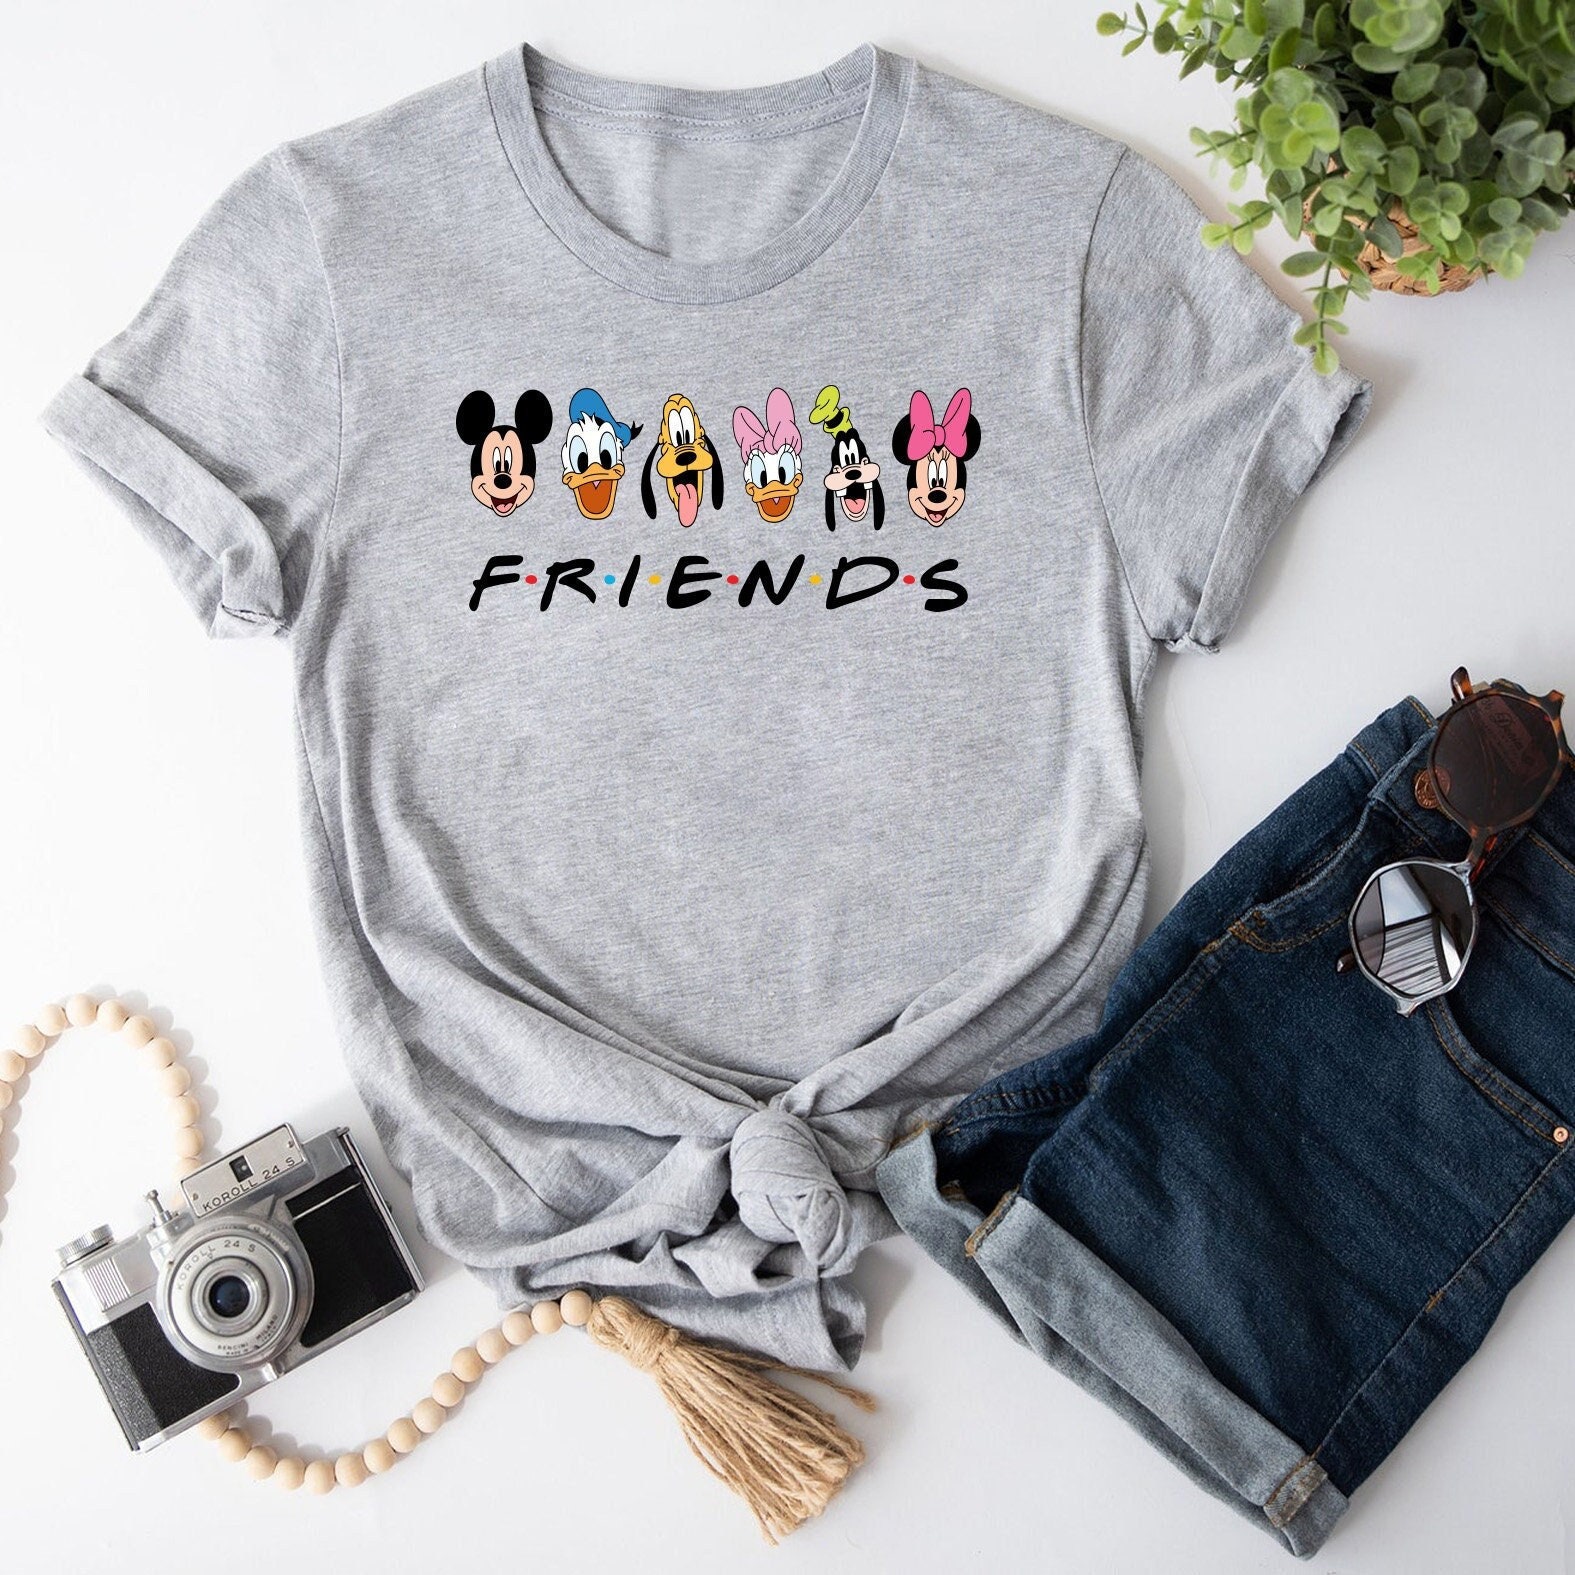 Best Friend Disney Shirts - Simply Magik - Custom Disney Shirts